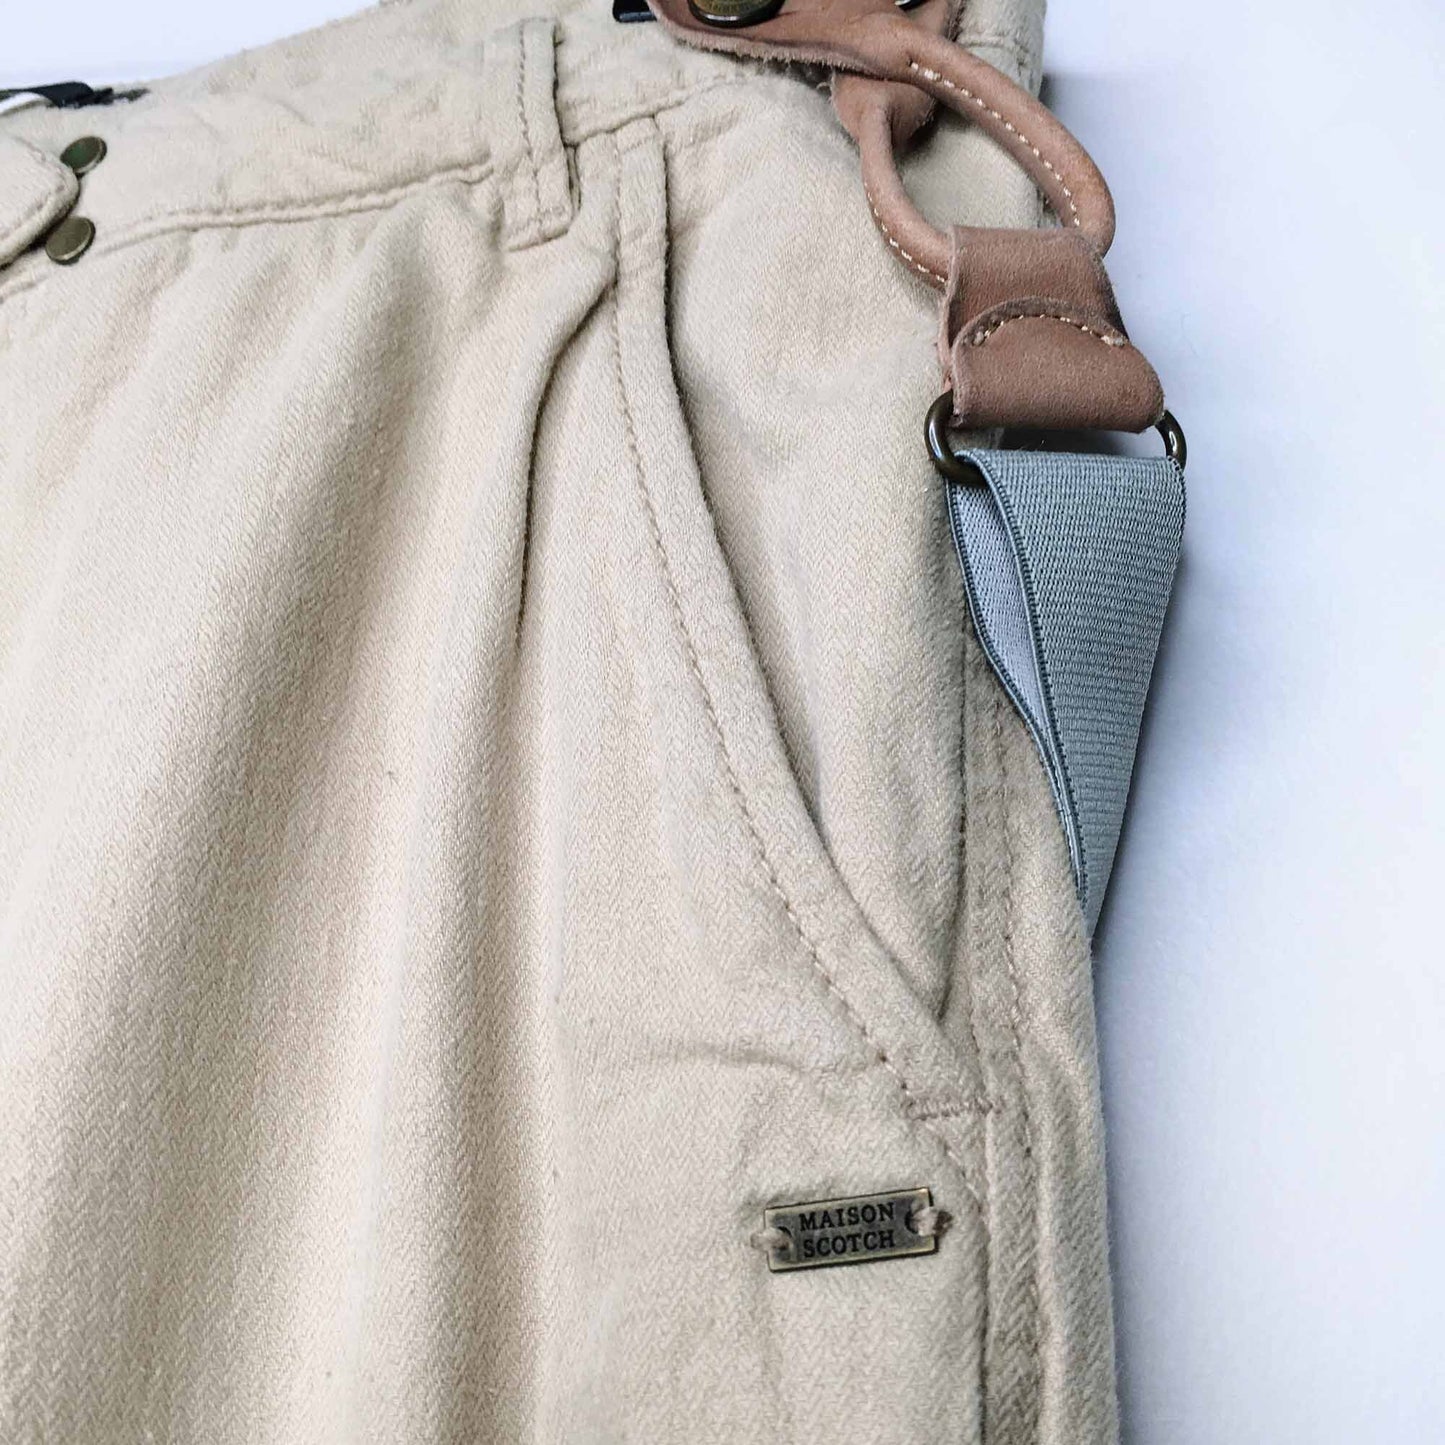 Scotch &amp; Soda linen-blend pants with suspenders - size P'tite